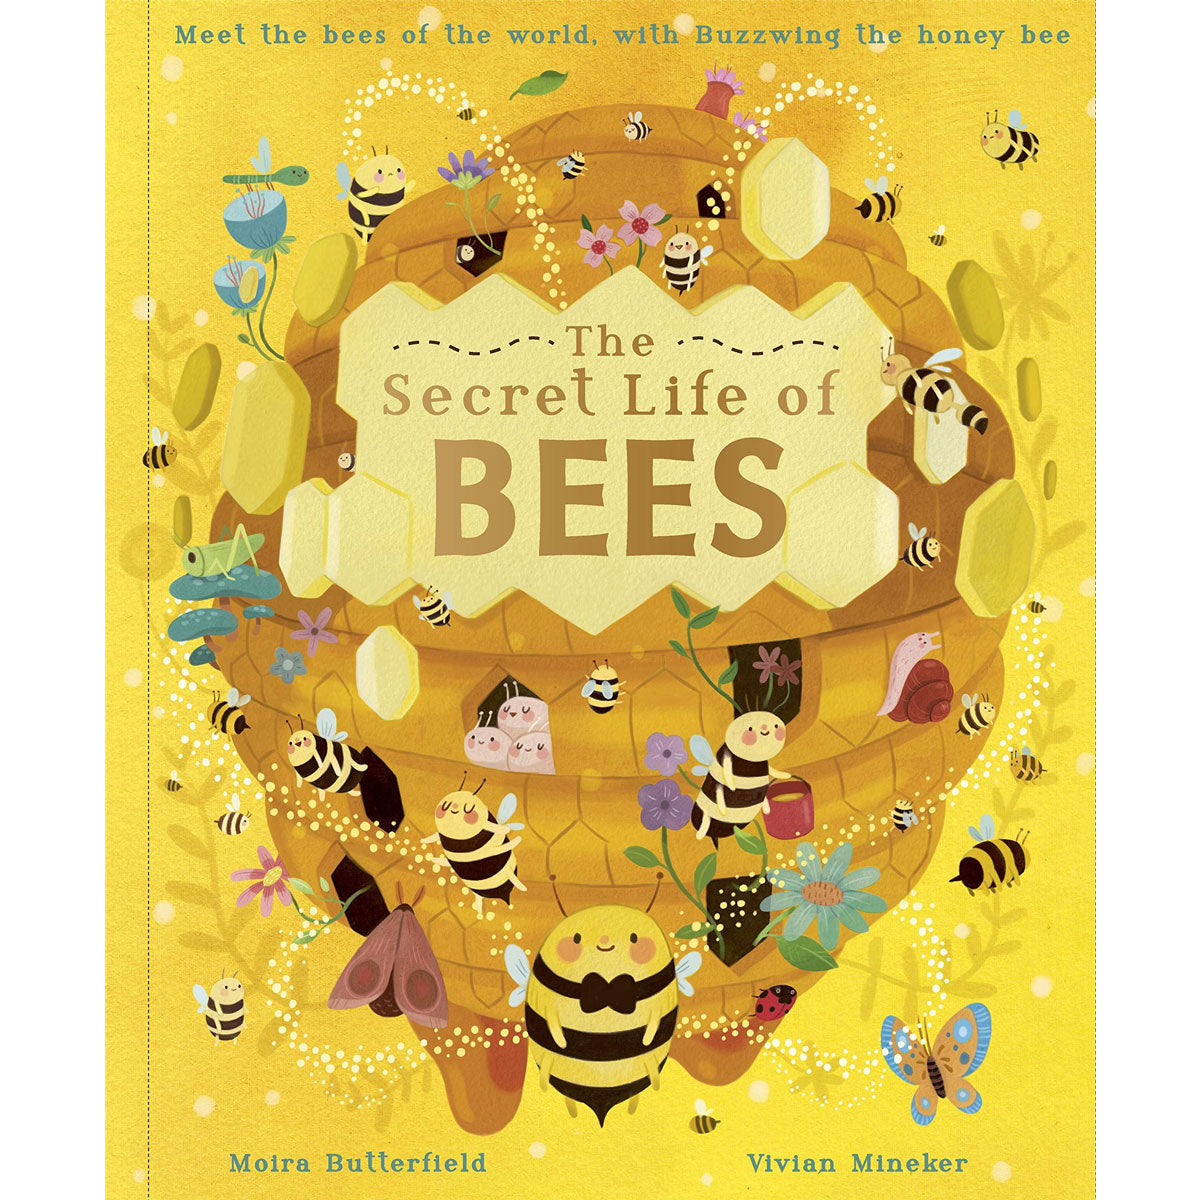 The Secret Life of Bees by Moira Butterfield & Vivian Mineker